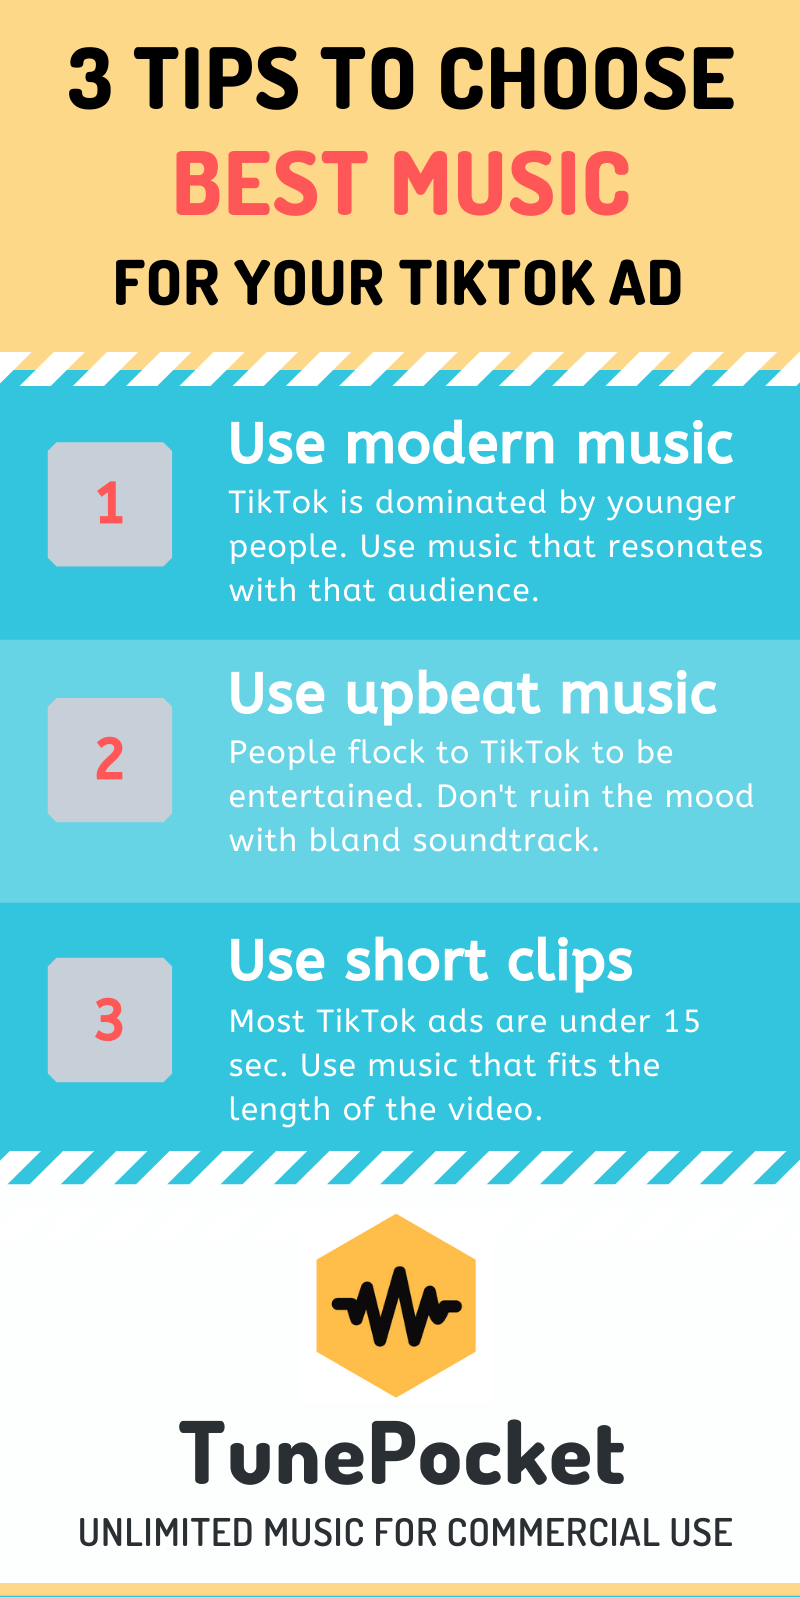 3 tips to choose best music for tiktok ads